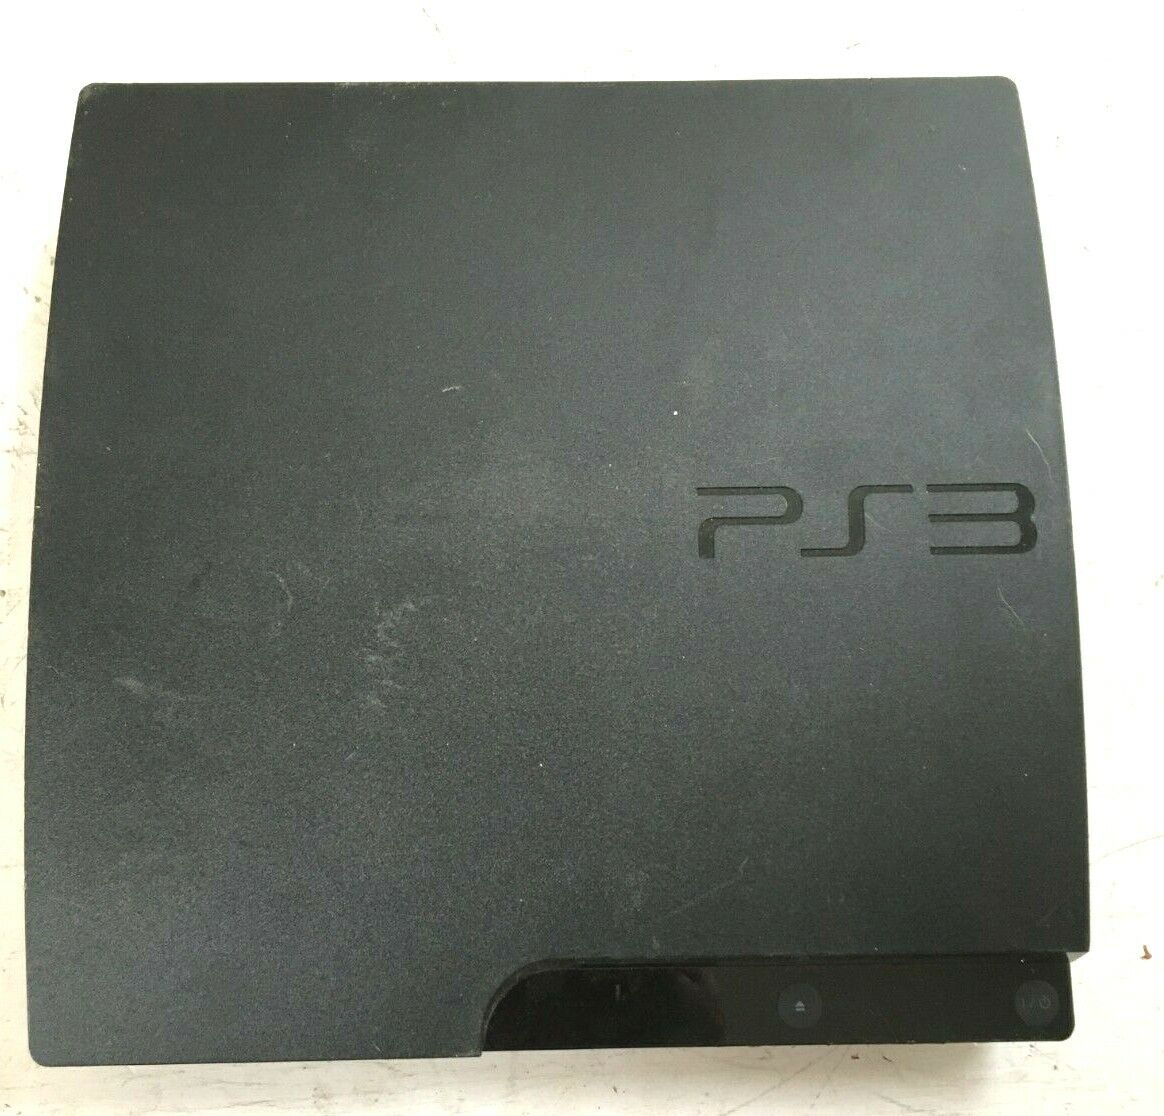 Sony Playstation PS3 Working Console Only Black Model CECH-3001B  Free Shipping Tania edycja limitowana